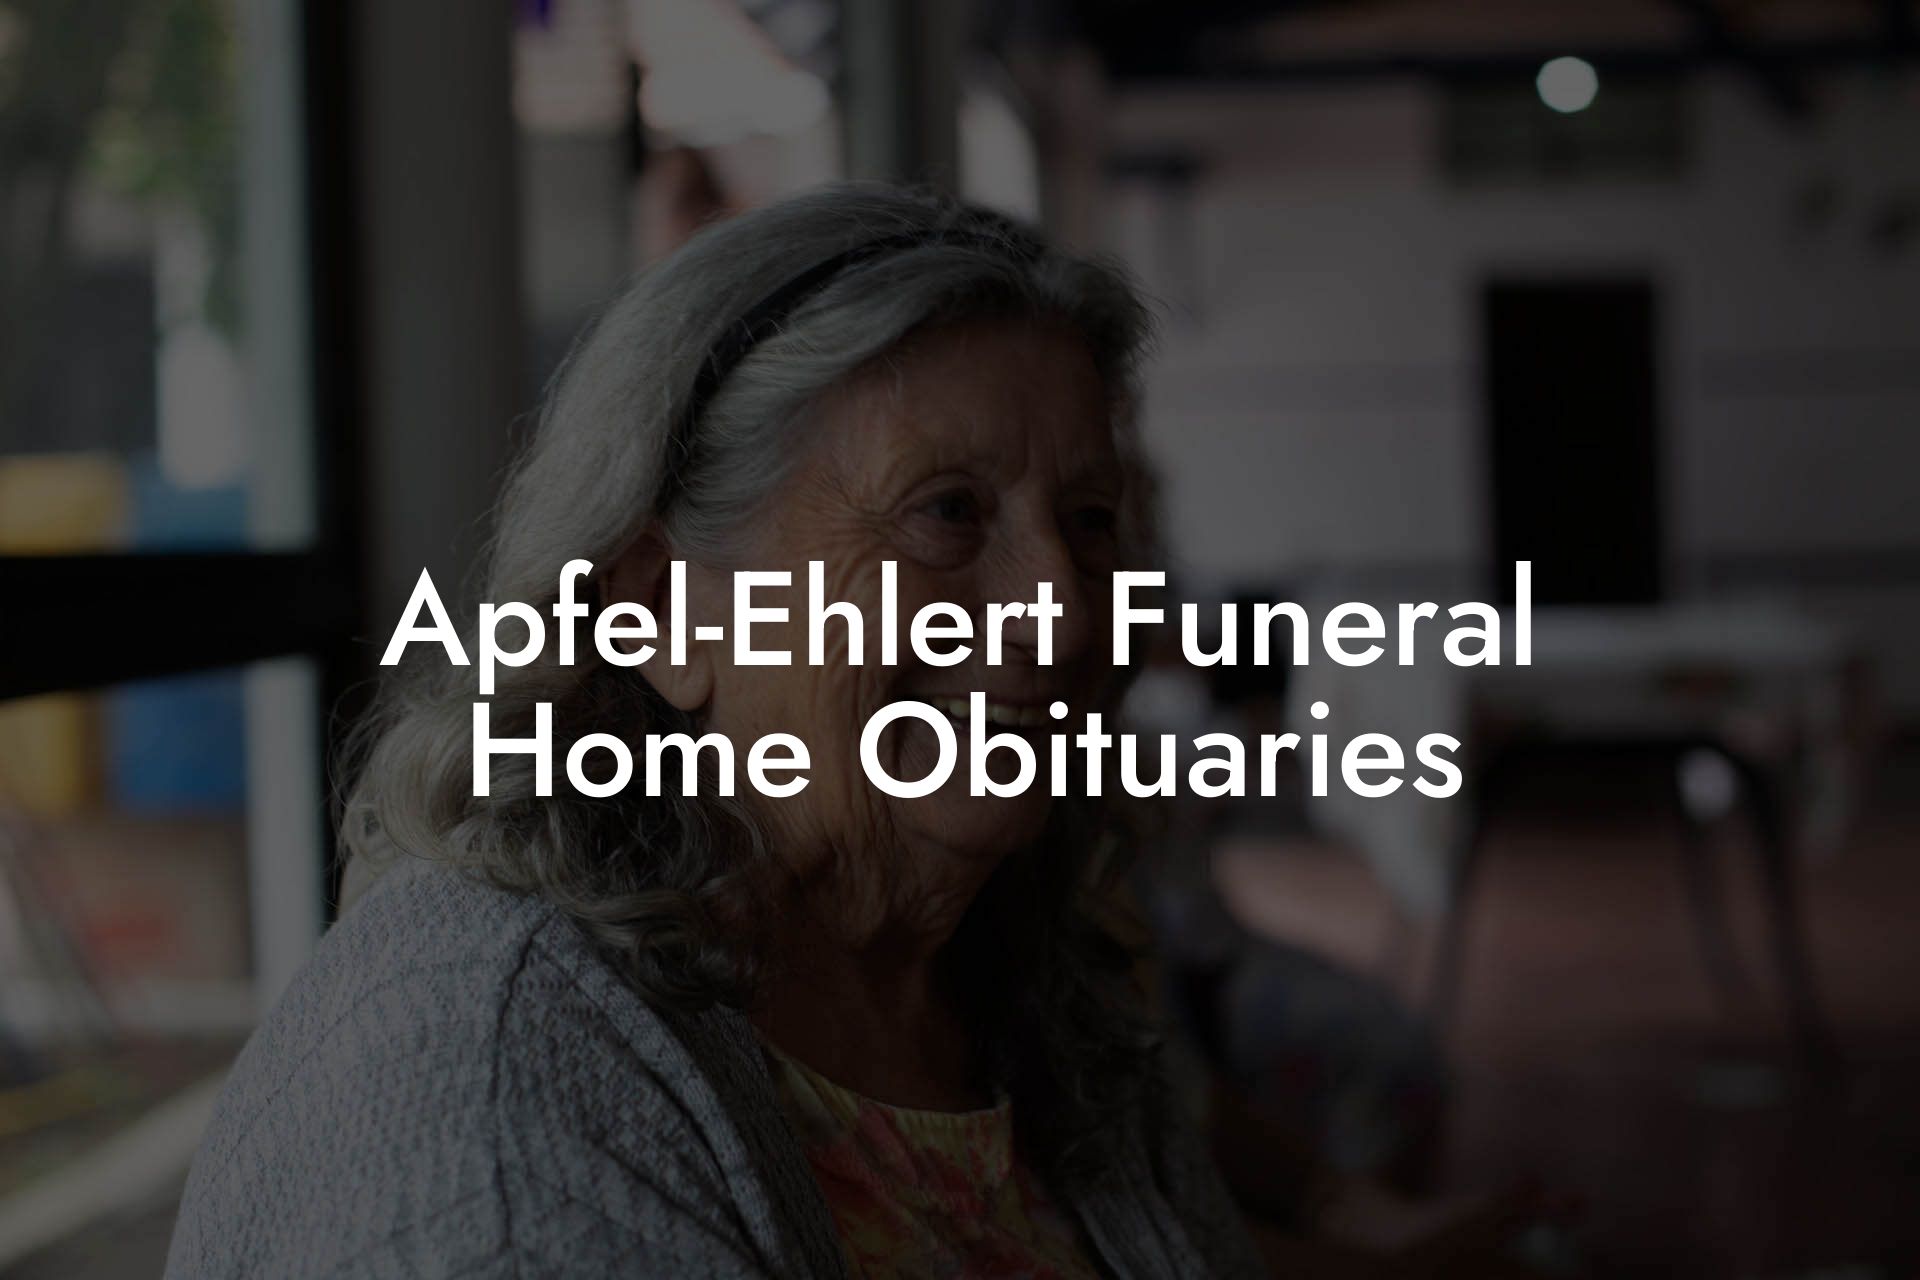 Apfel-Ehlert Funeral Home Obituaries